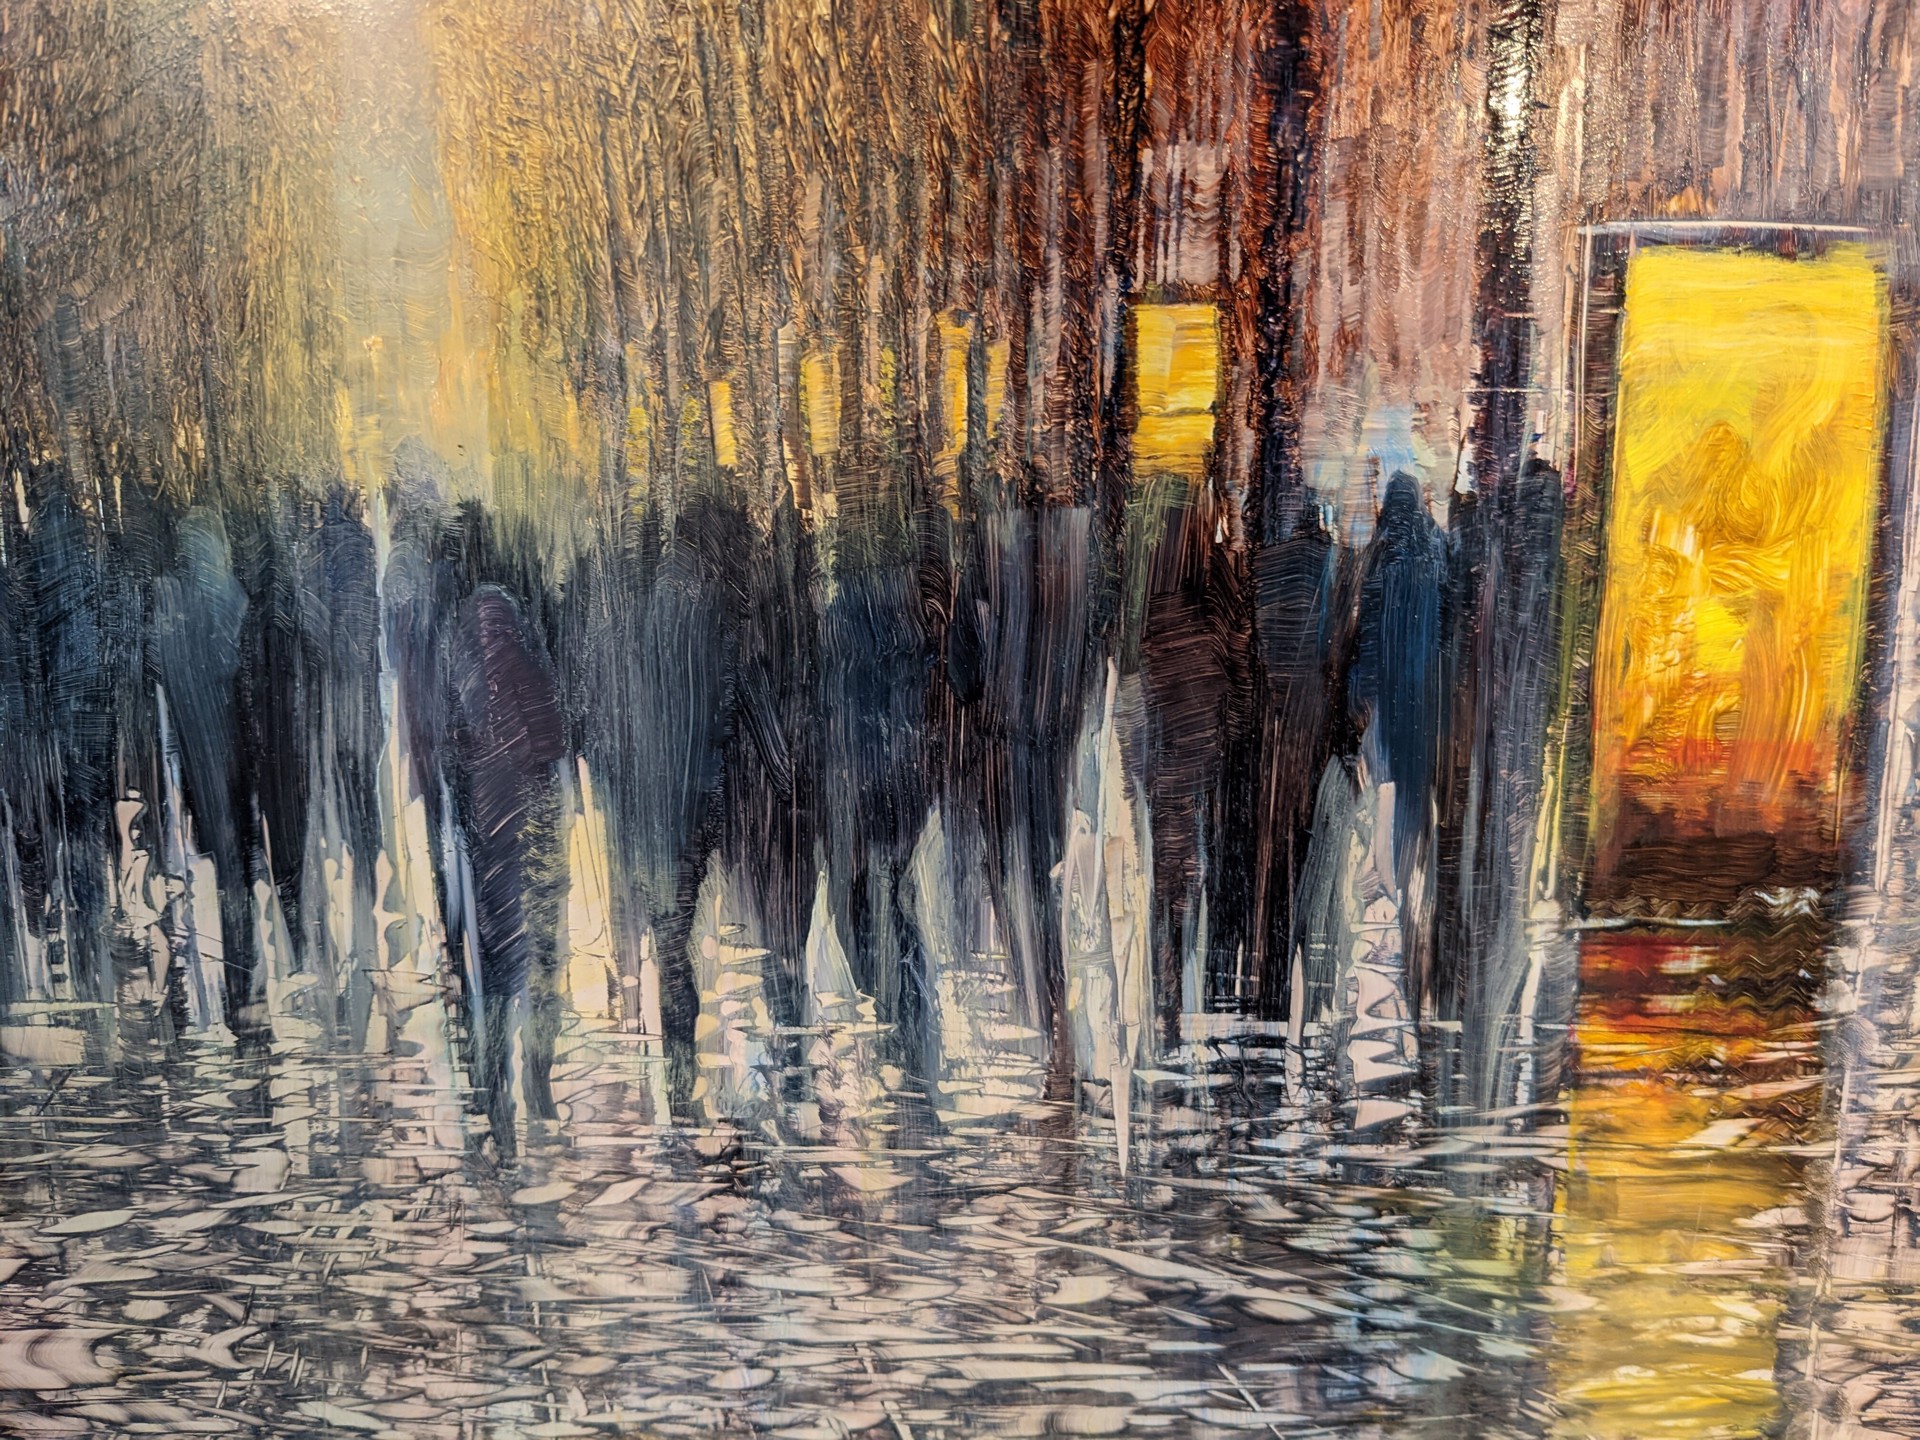 City Rain by David Allen Dunlop